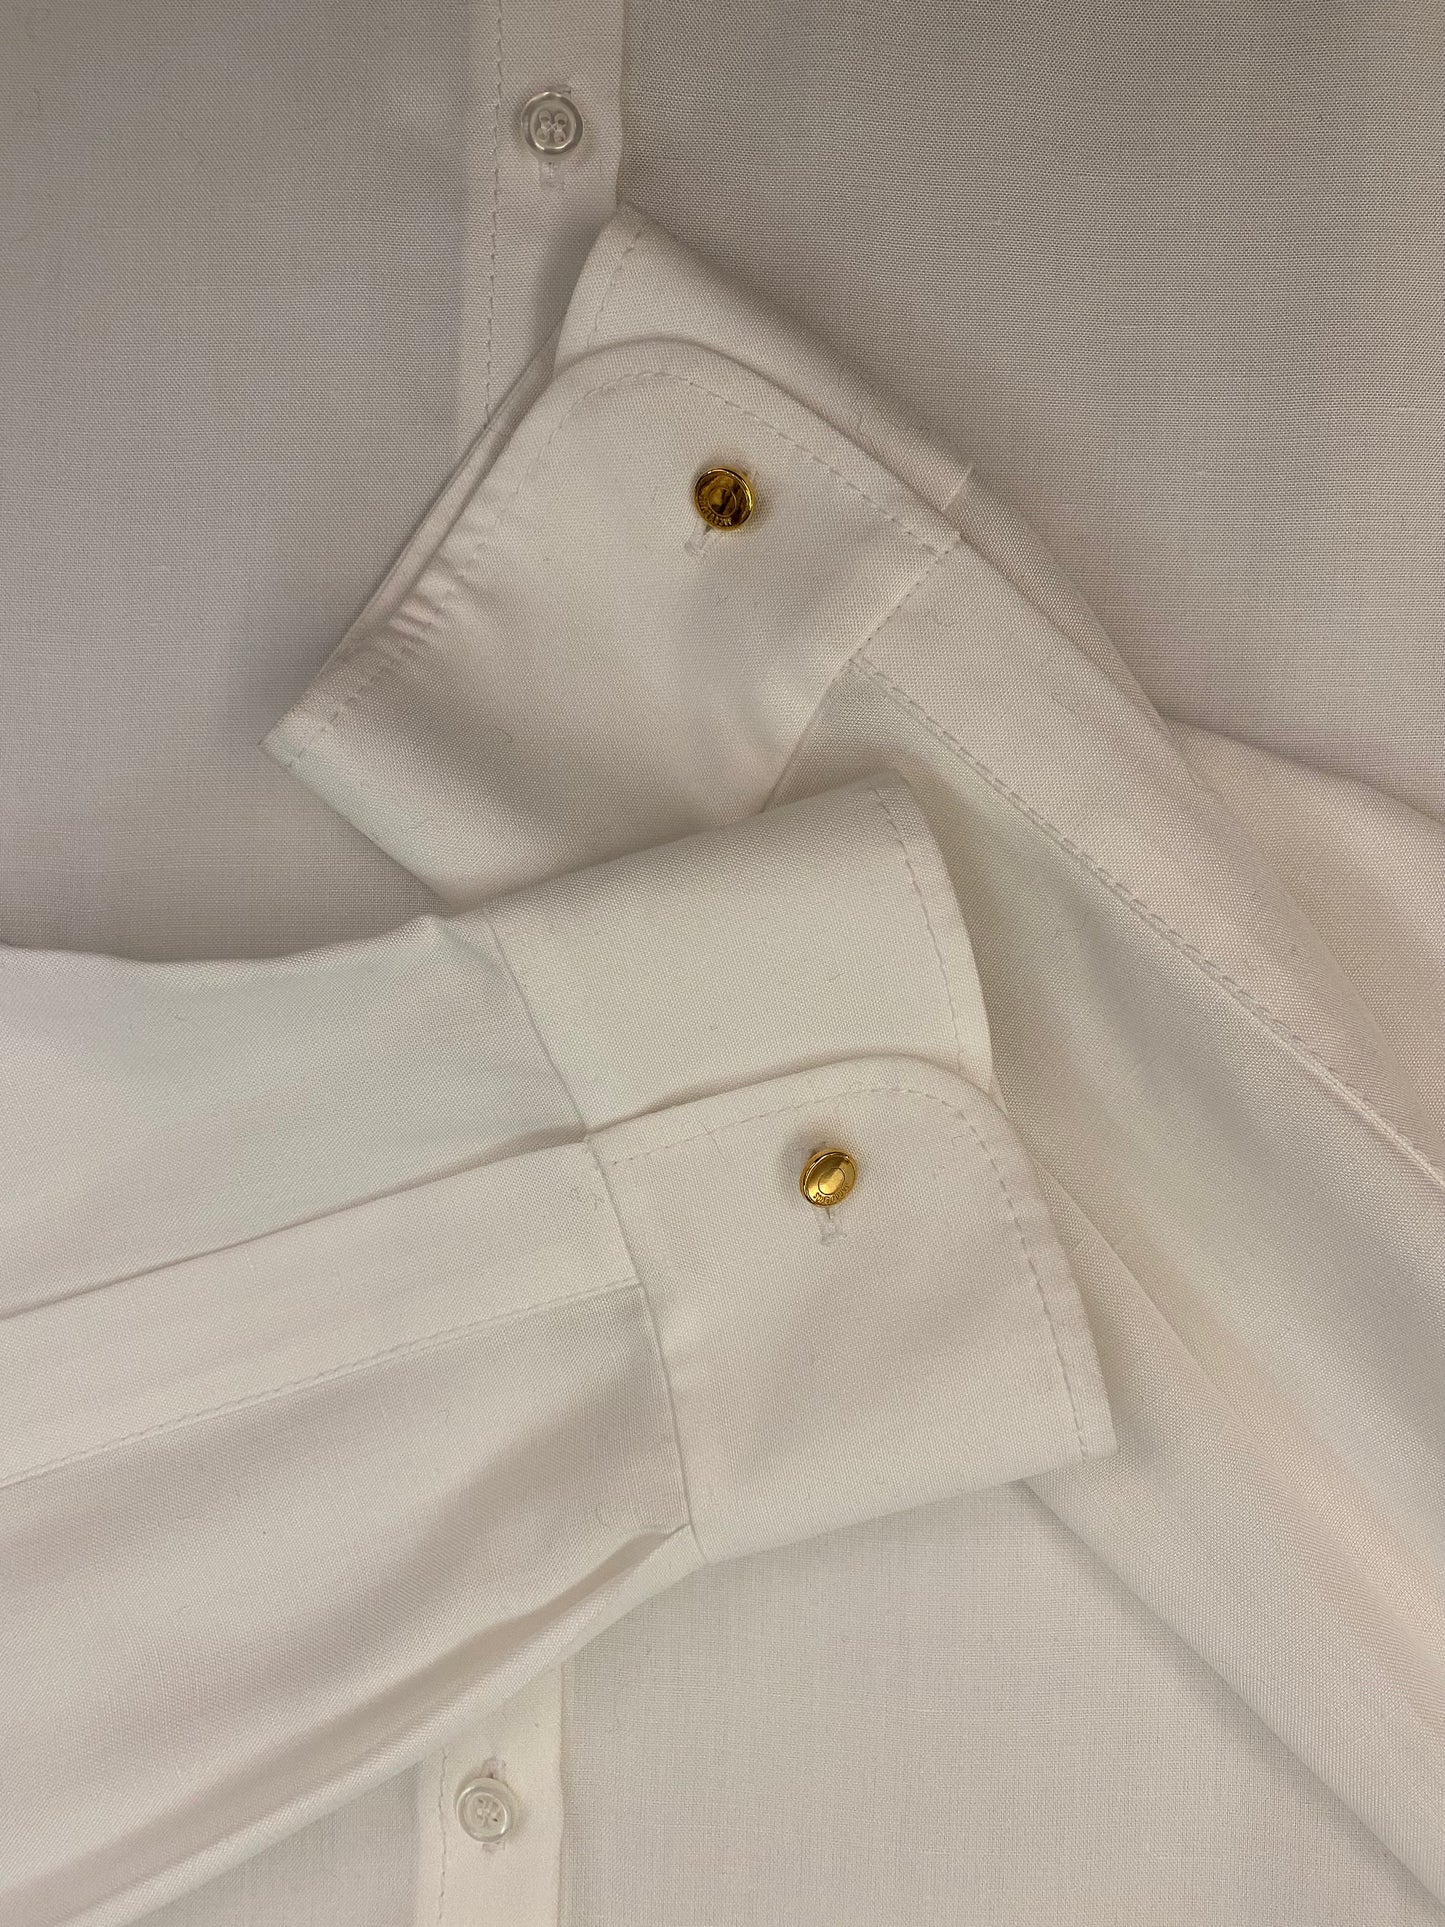 JACQUEMUS White Long Shirt Size 36